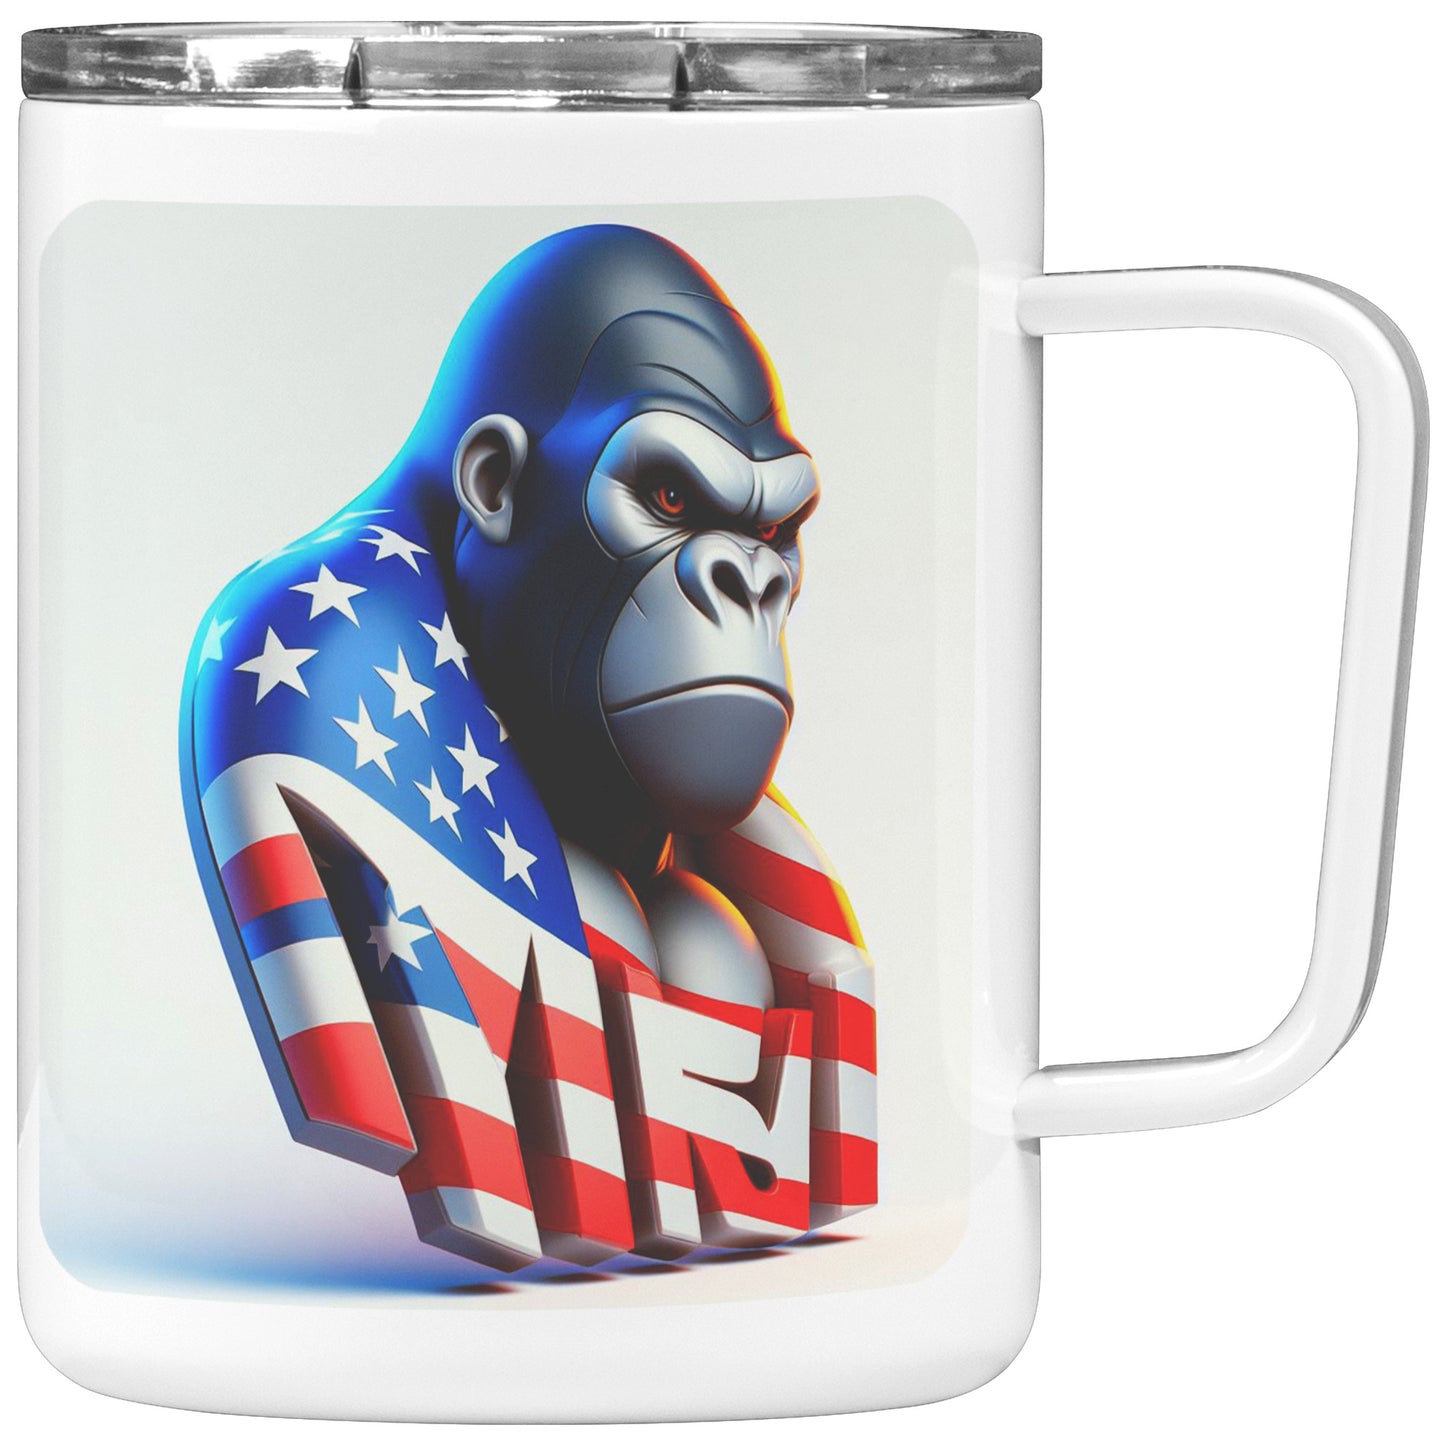 Grumpy Gorilla - Insulated Coffee Mug #4